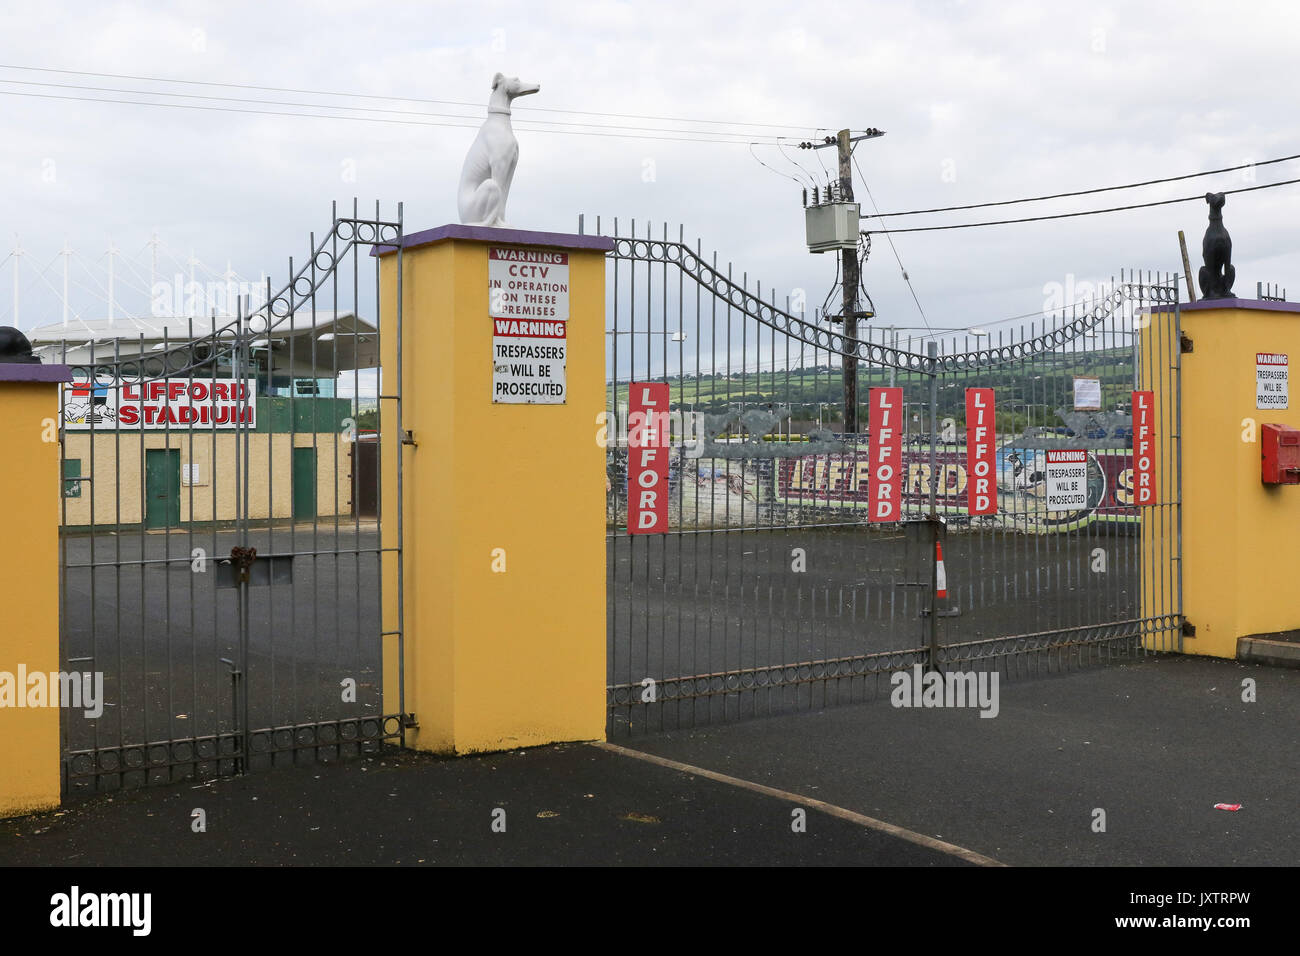 Lifford Greyhound Stadium, Lifford County Donegal, Ireland. Stock Photo